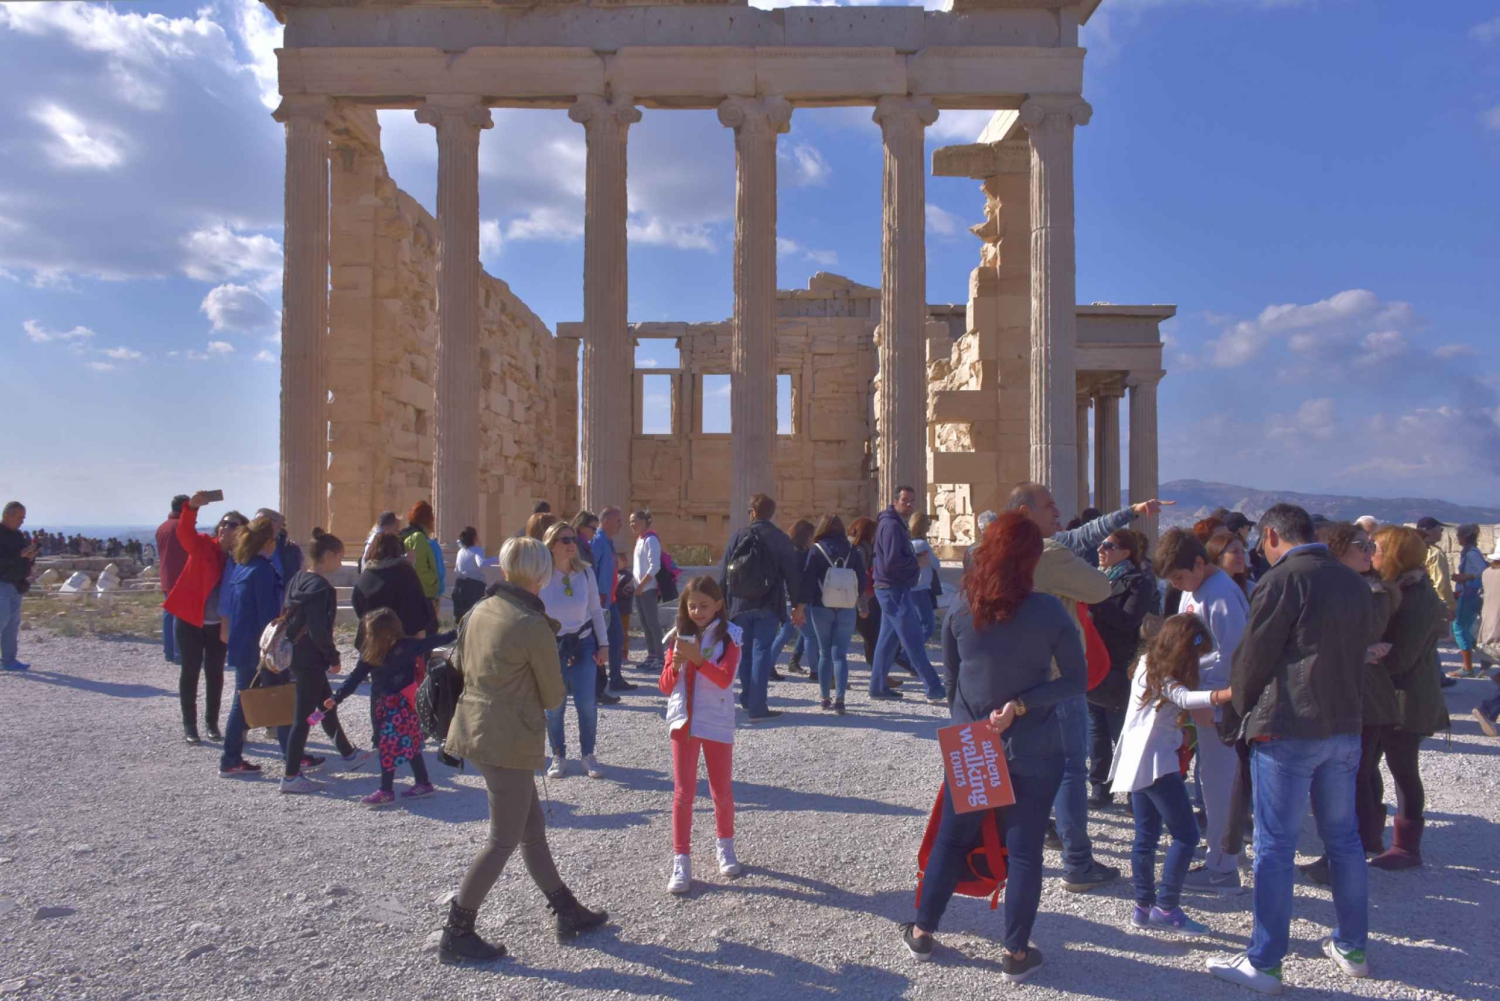 Acropolis, Panathenaic Stadium and Plaka Private Group Tour